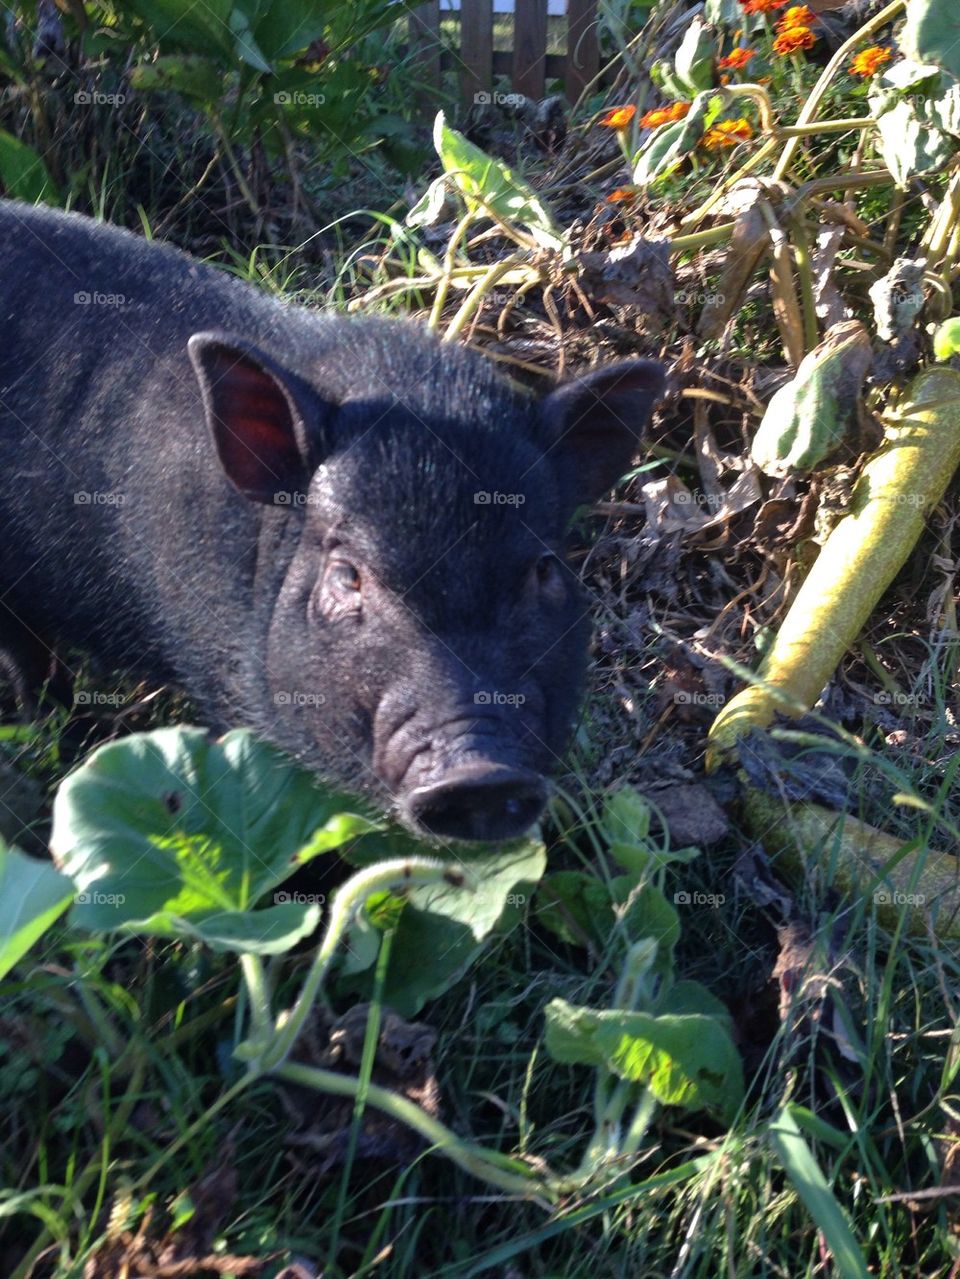 Potbelly pig in the garden